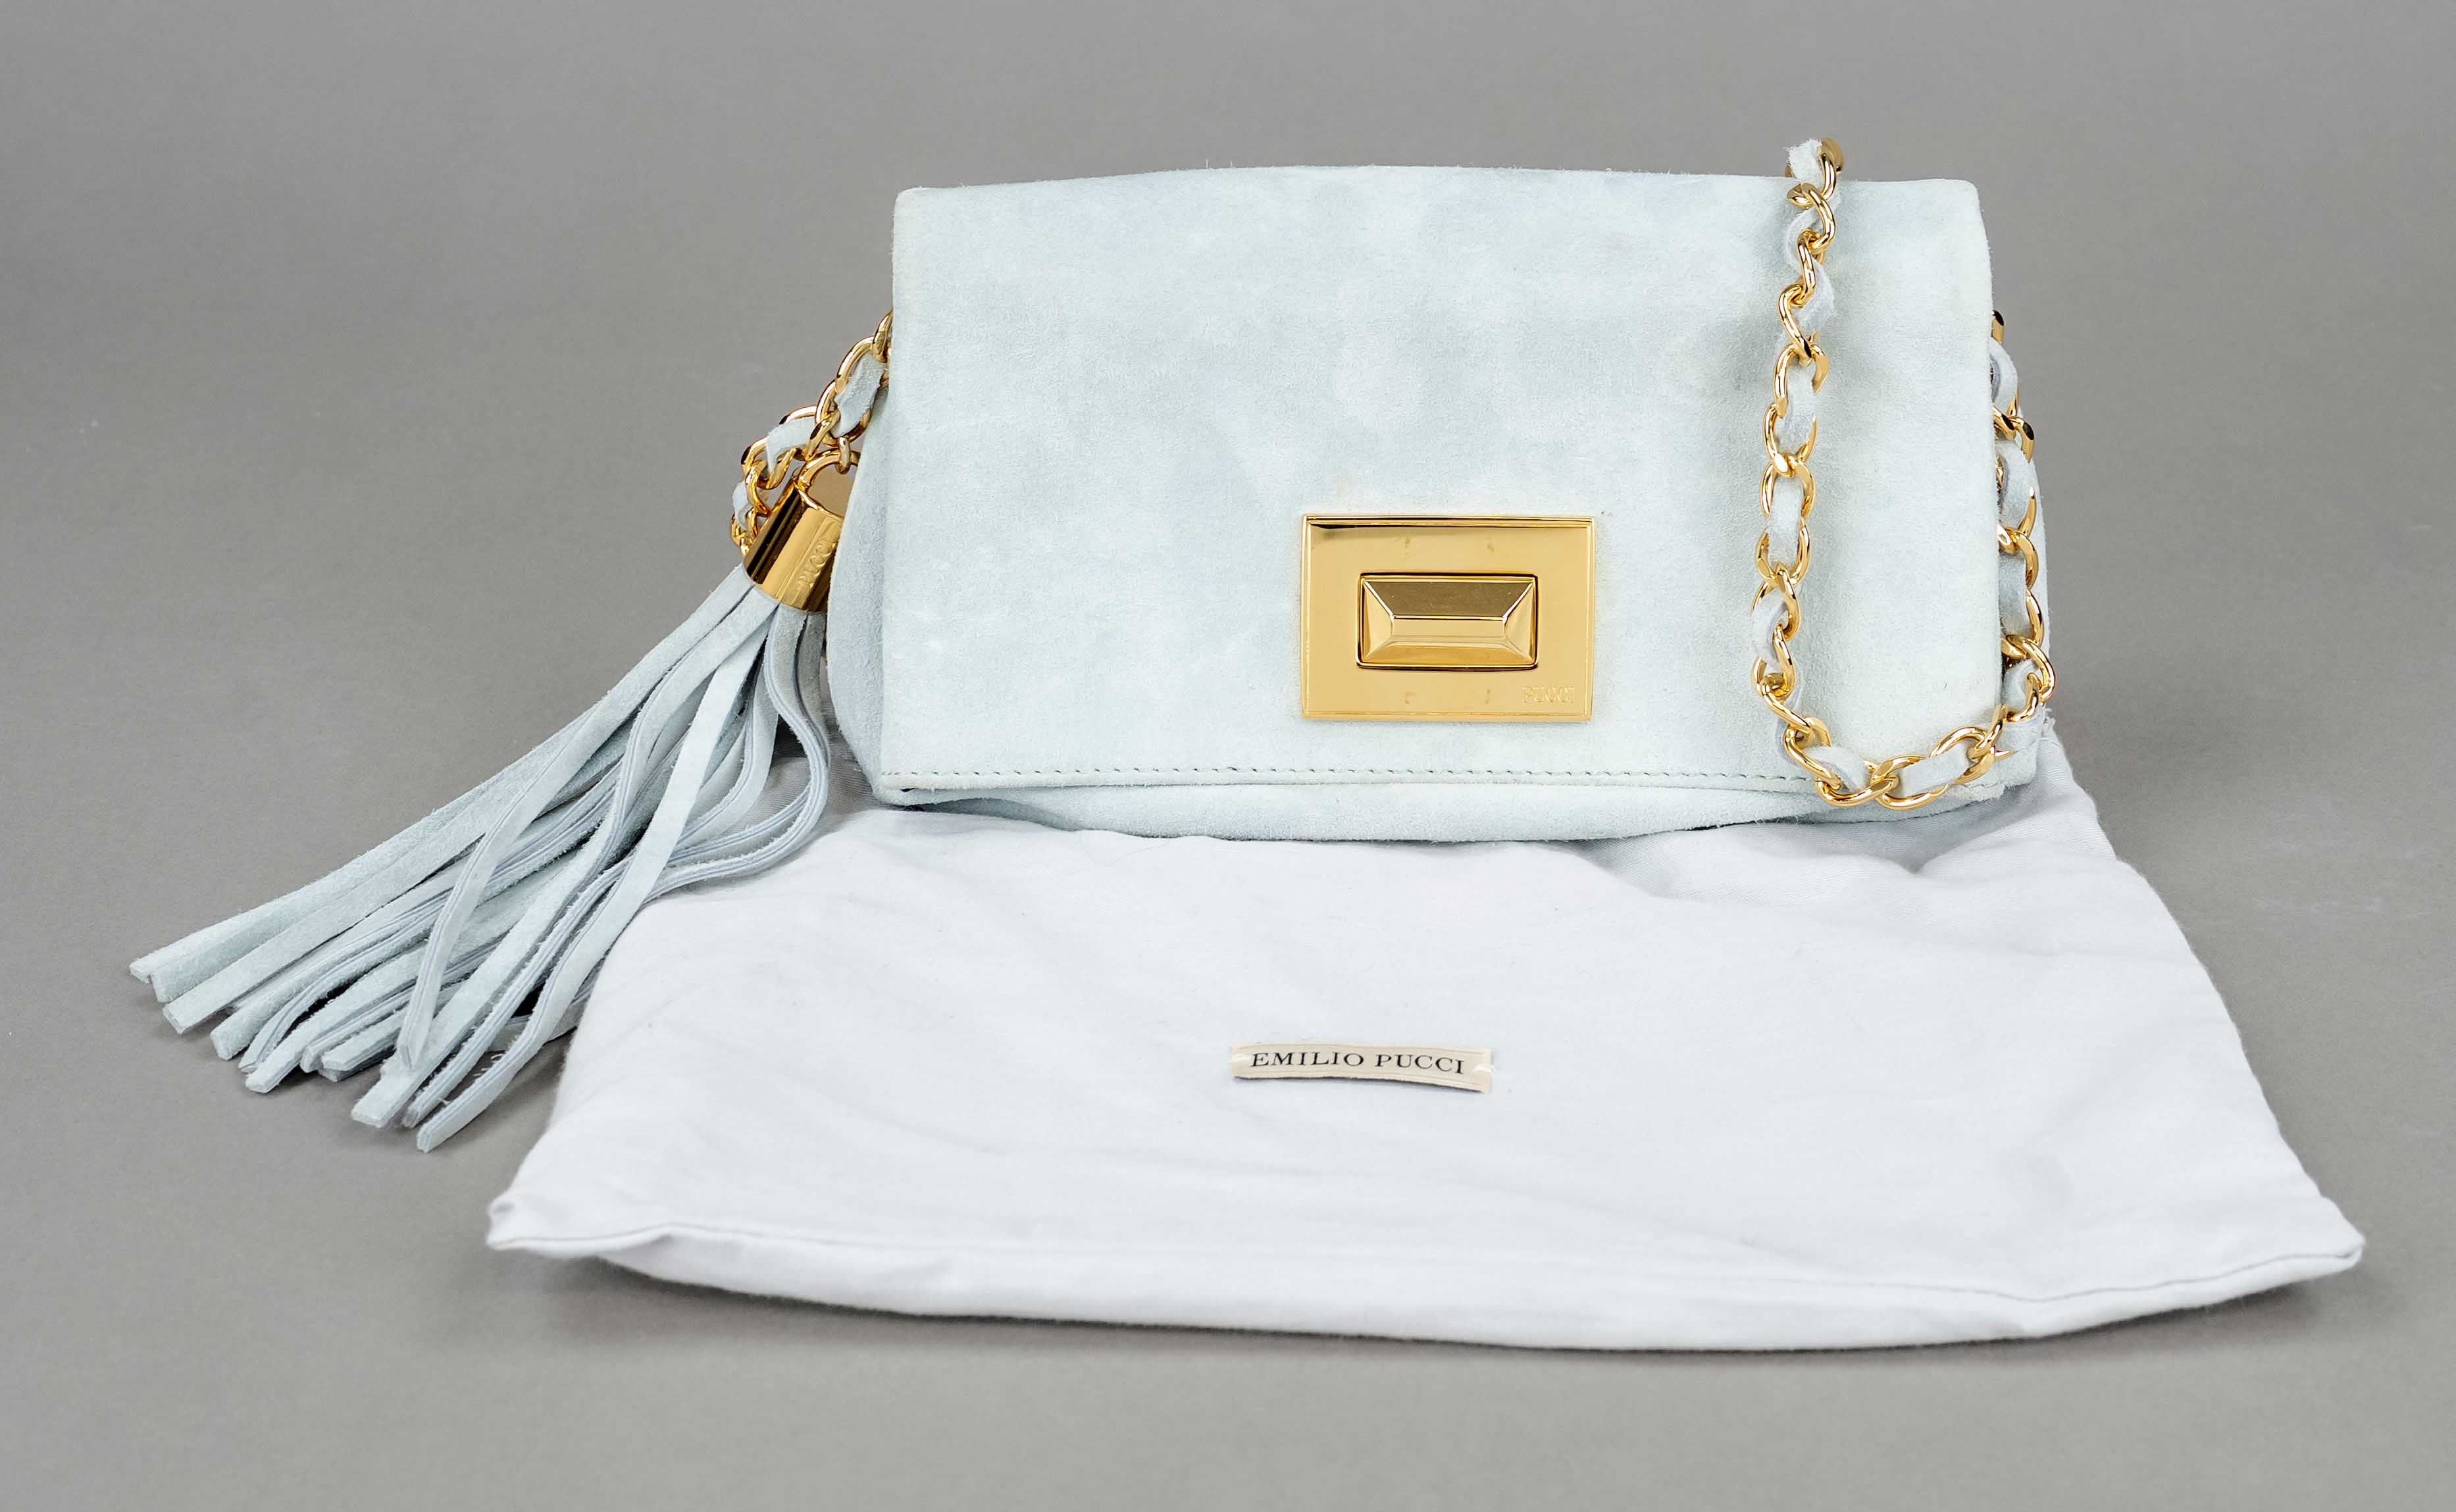 Emilio Pucci, Small Shoulder Bag, dove blue suede, gold-tone hardware, leather interwoven link chain